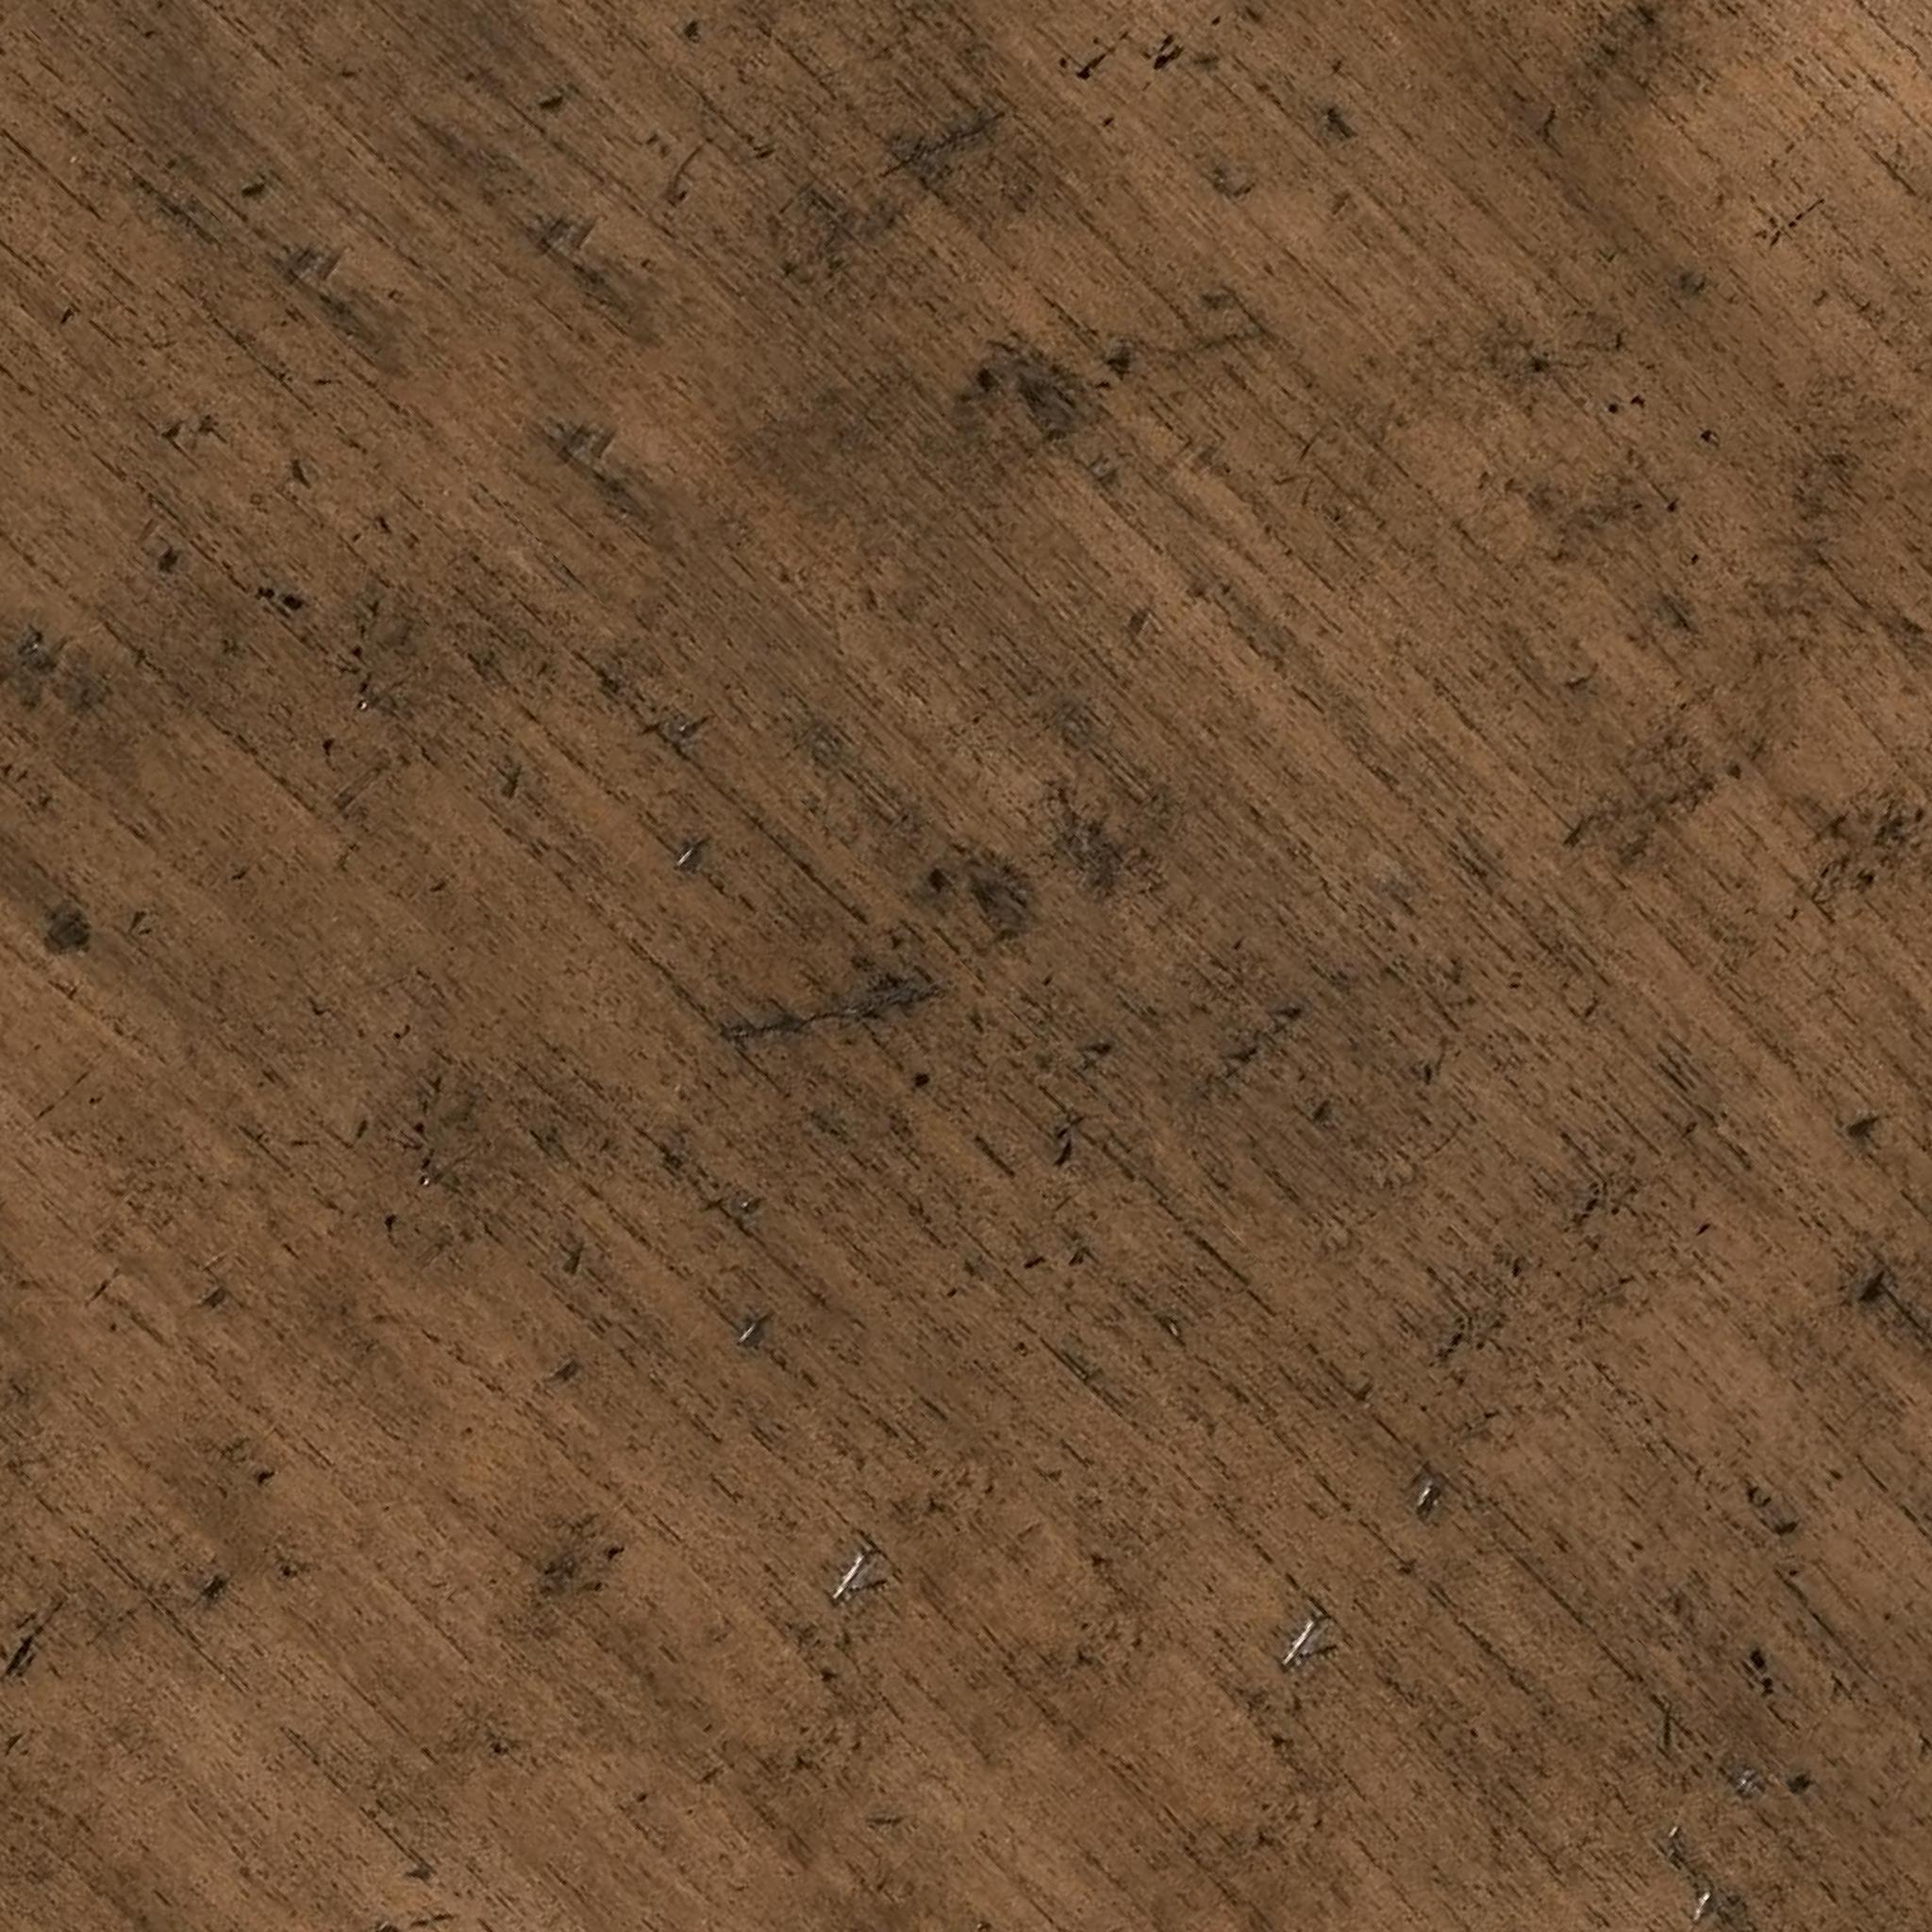 Rustic Wood Texture Seamless